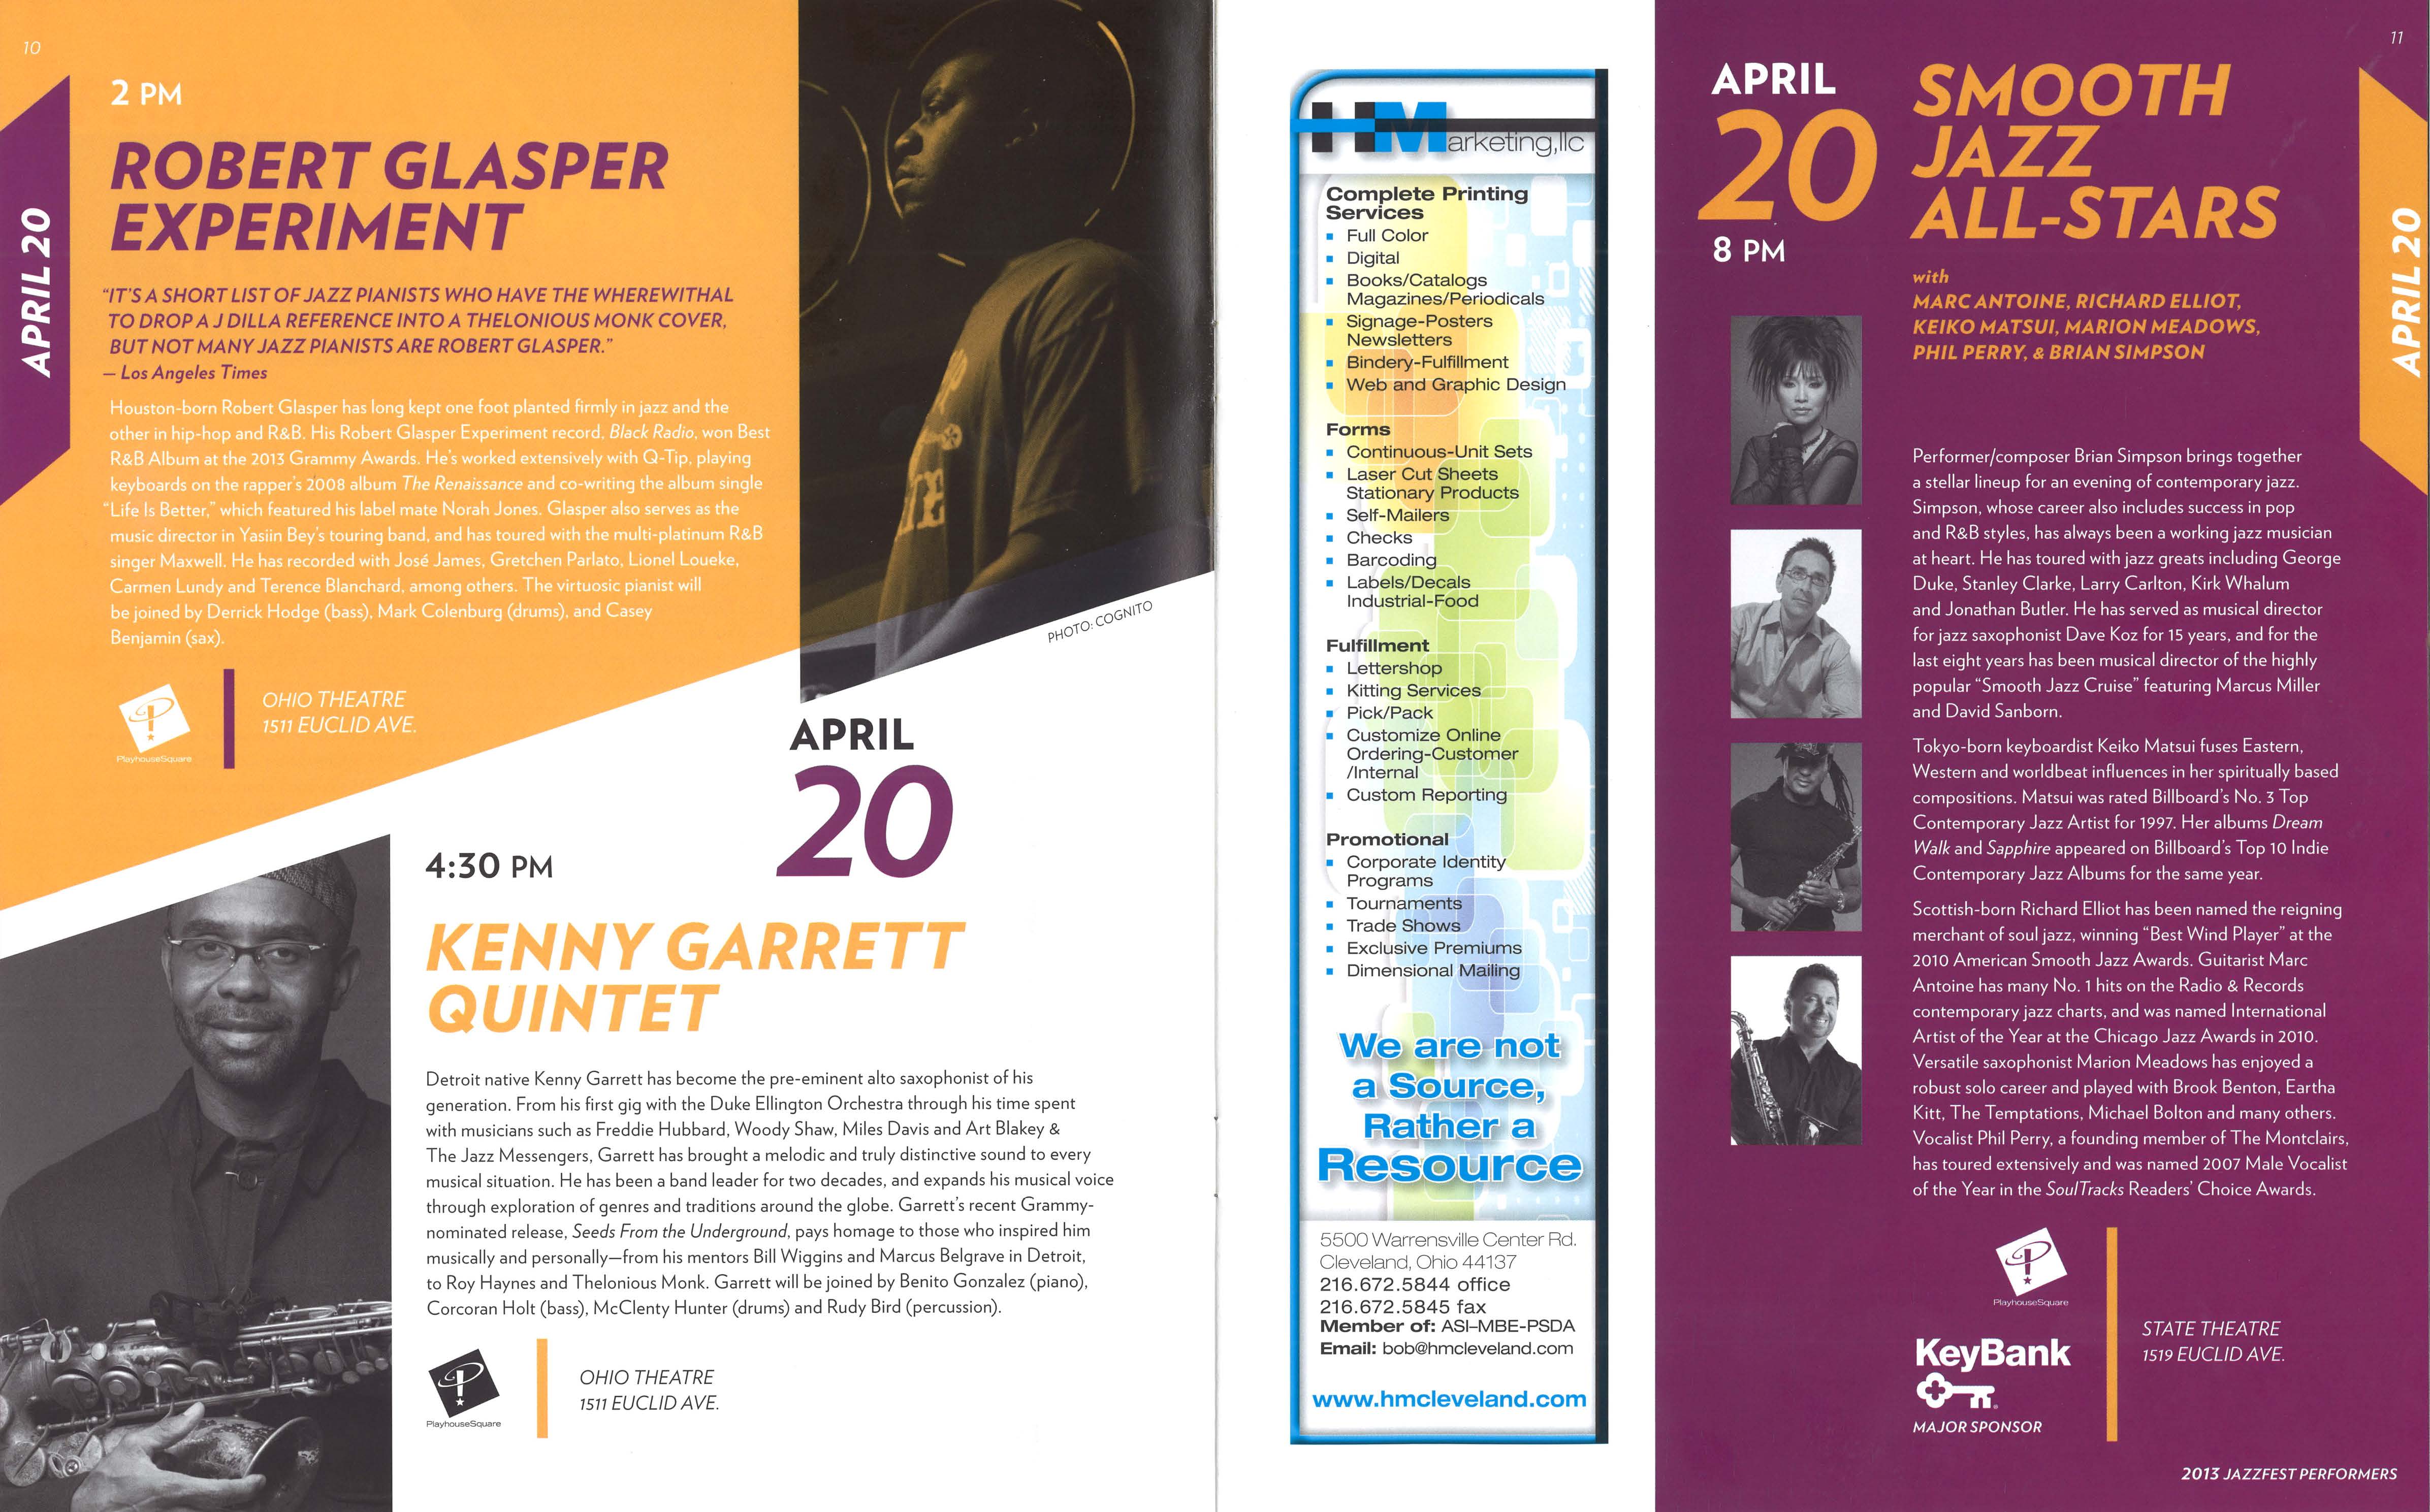 Kenny Garrett Program Bio